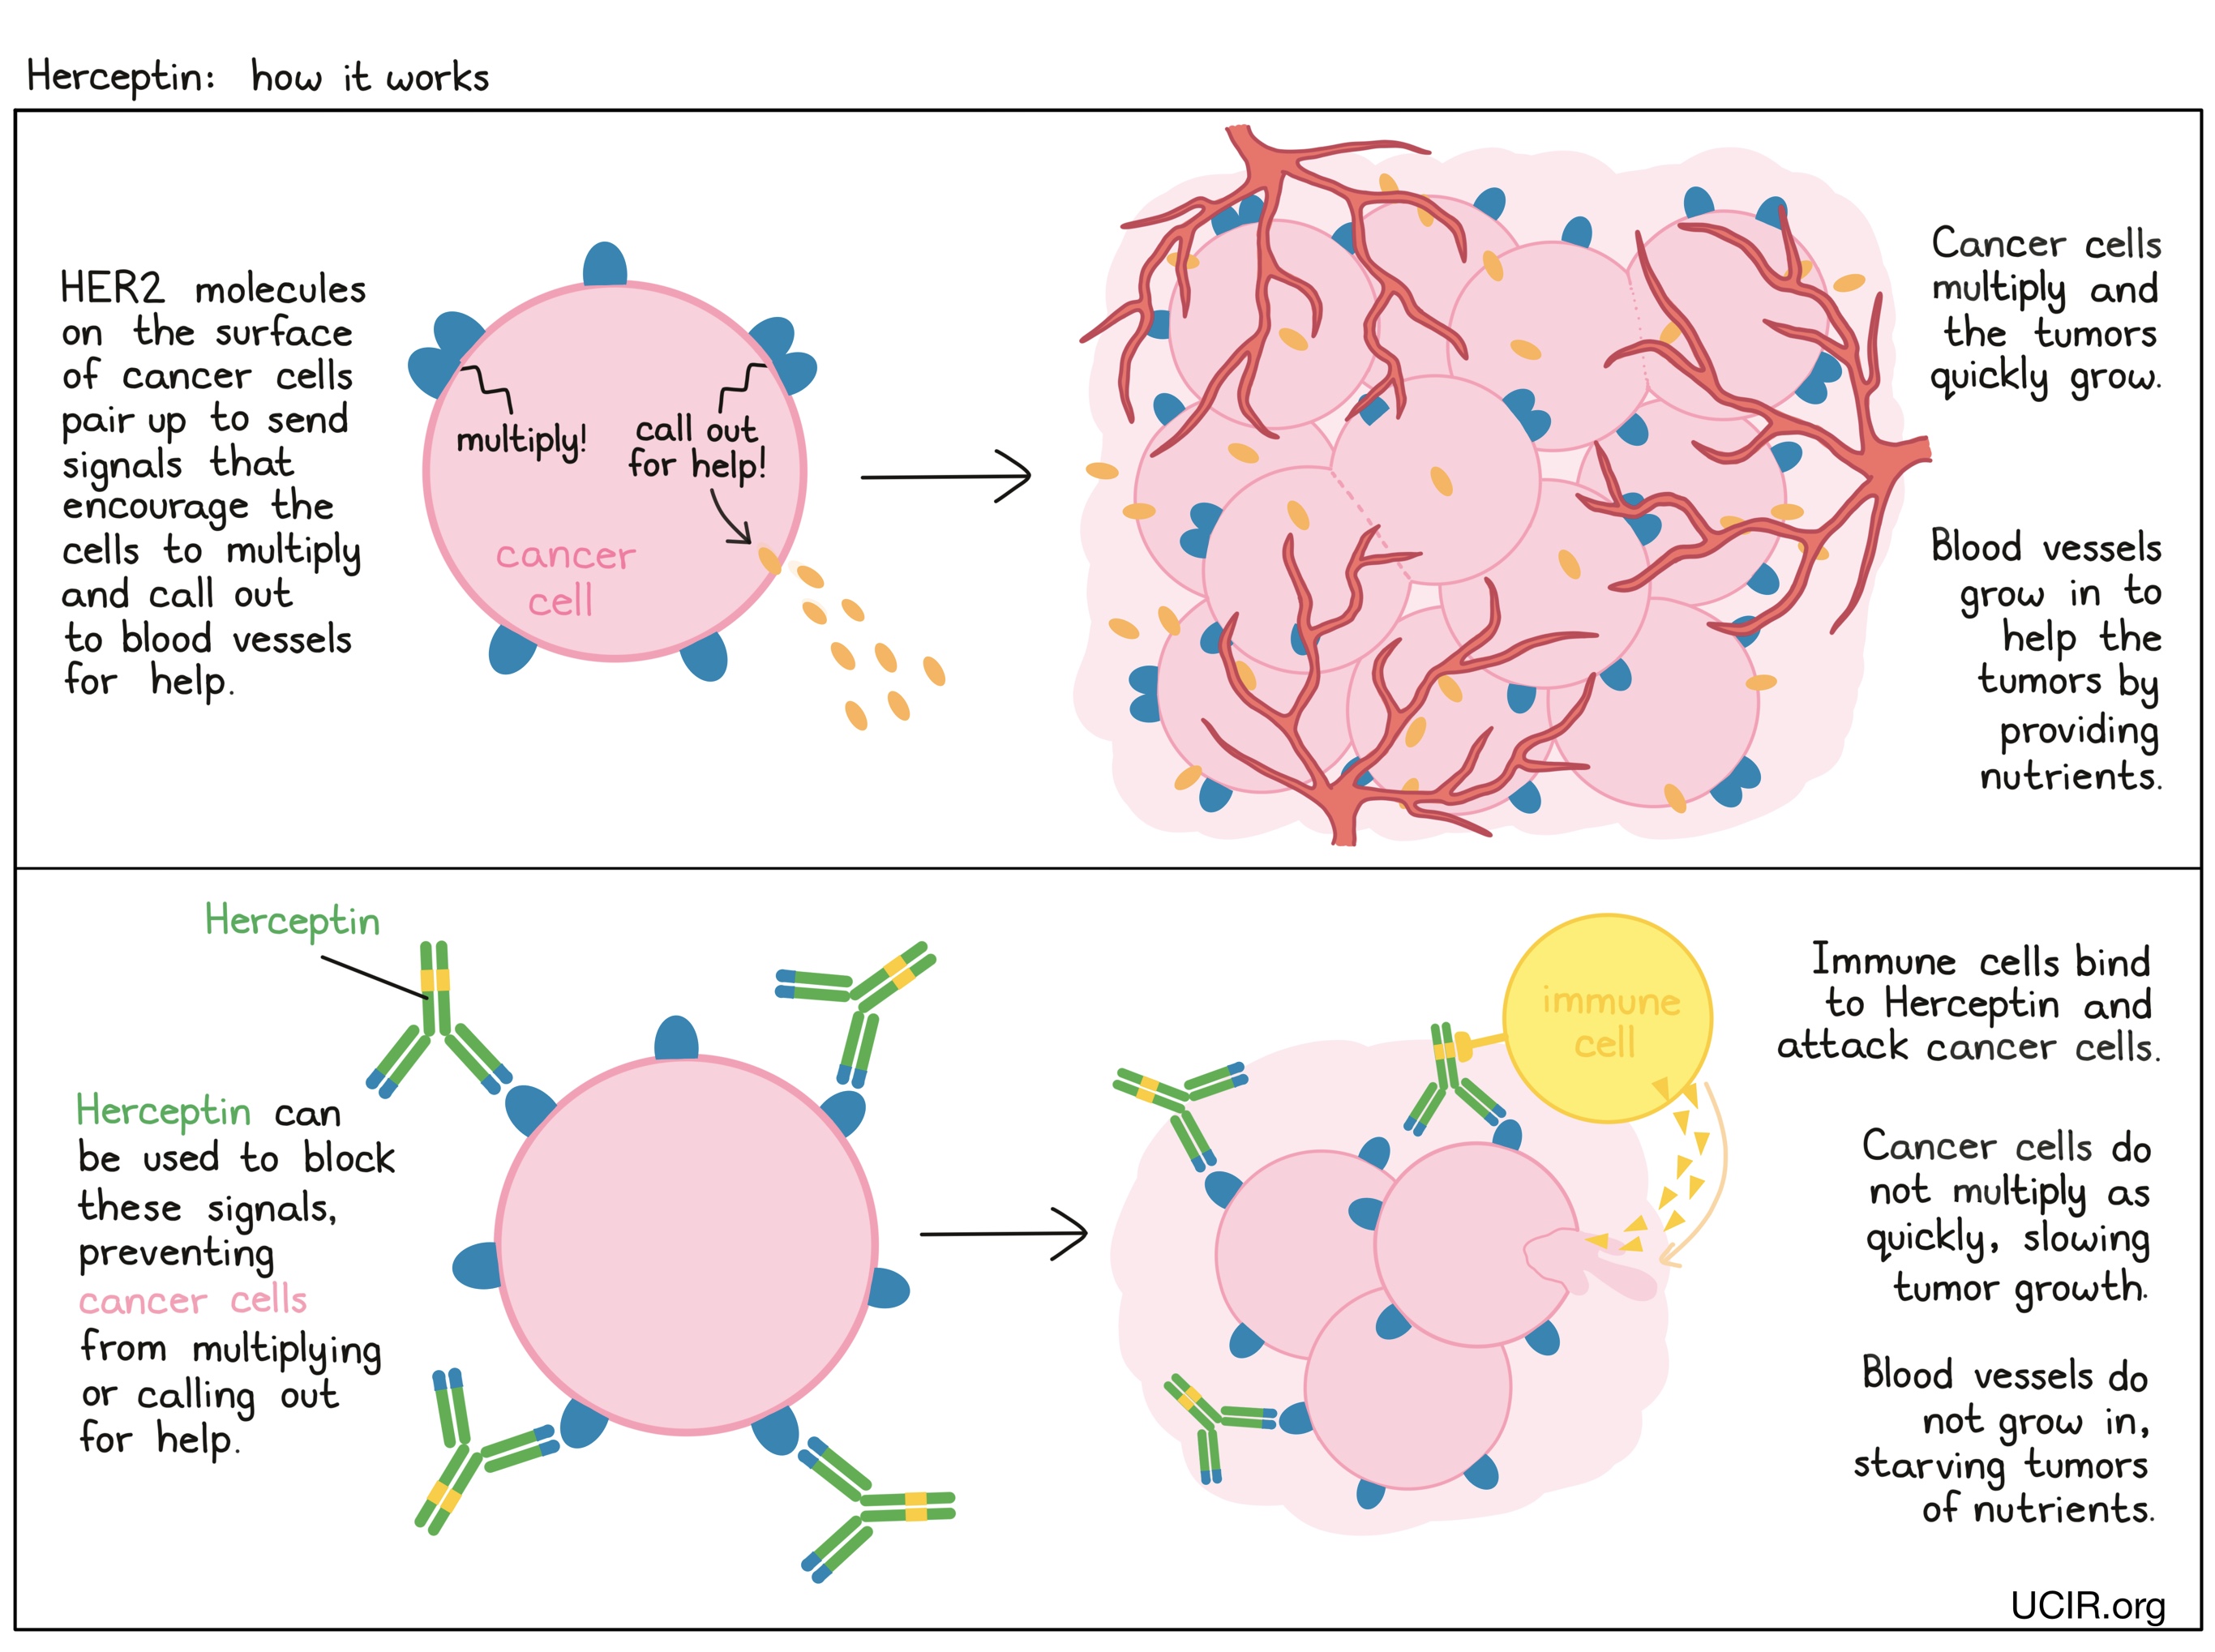 Illustration showing how Herceptin works